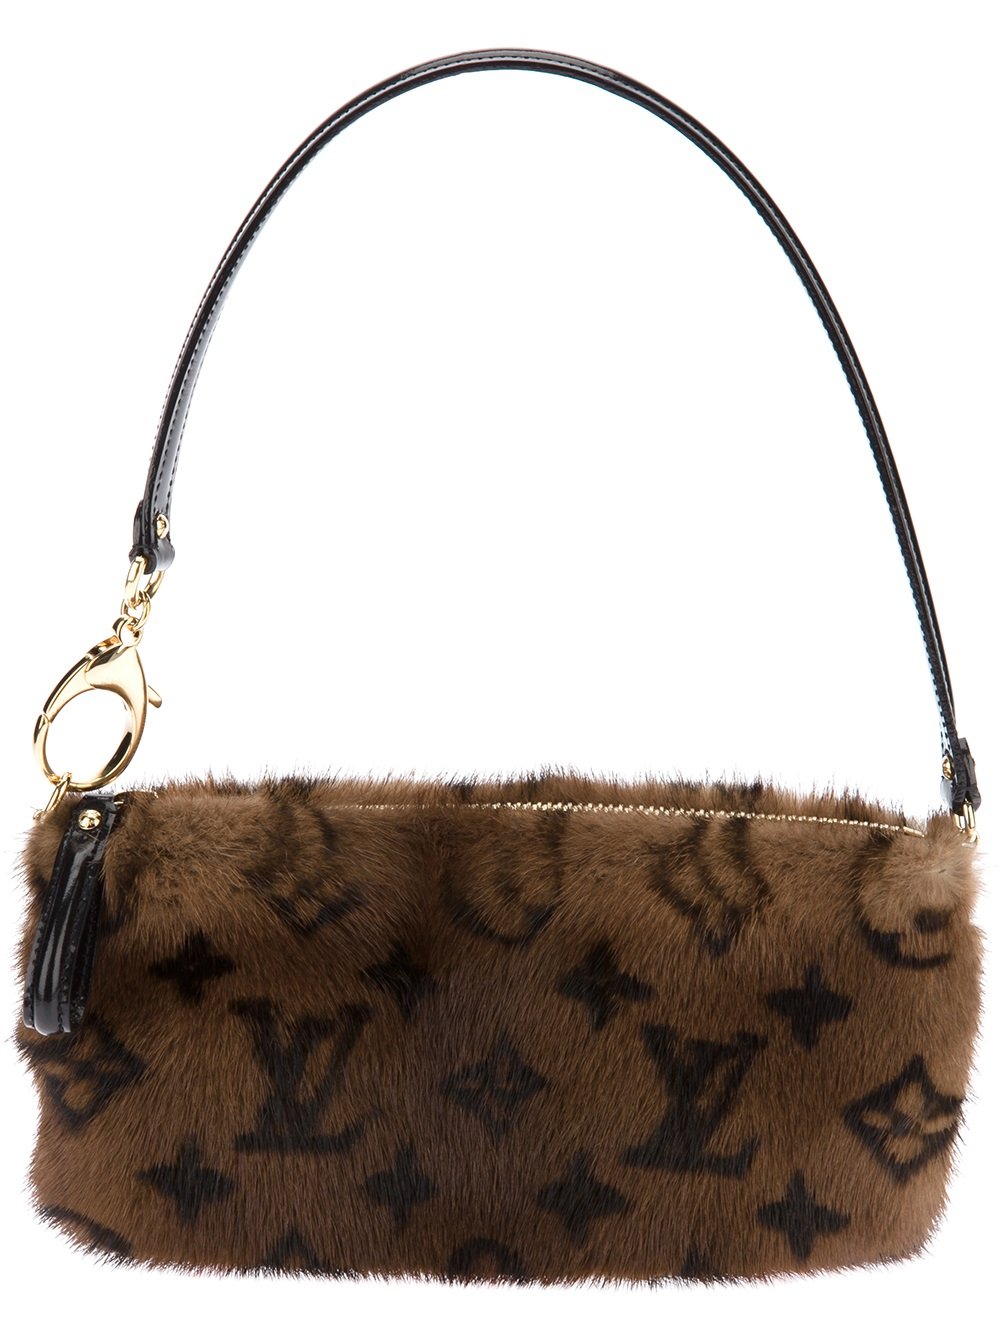 Lyst - Louis Vuitton Mink Fur Shoulder Bag in Brown